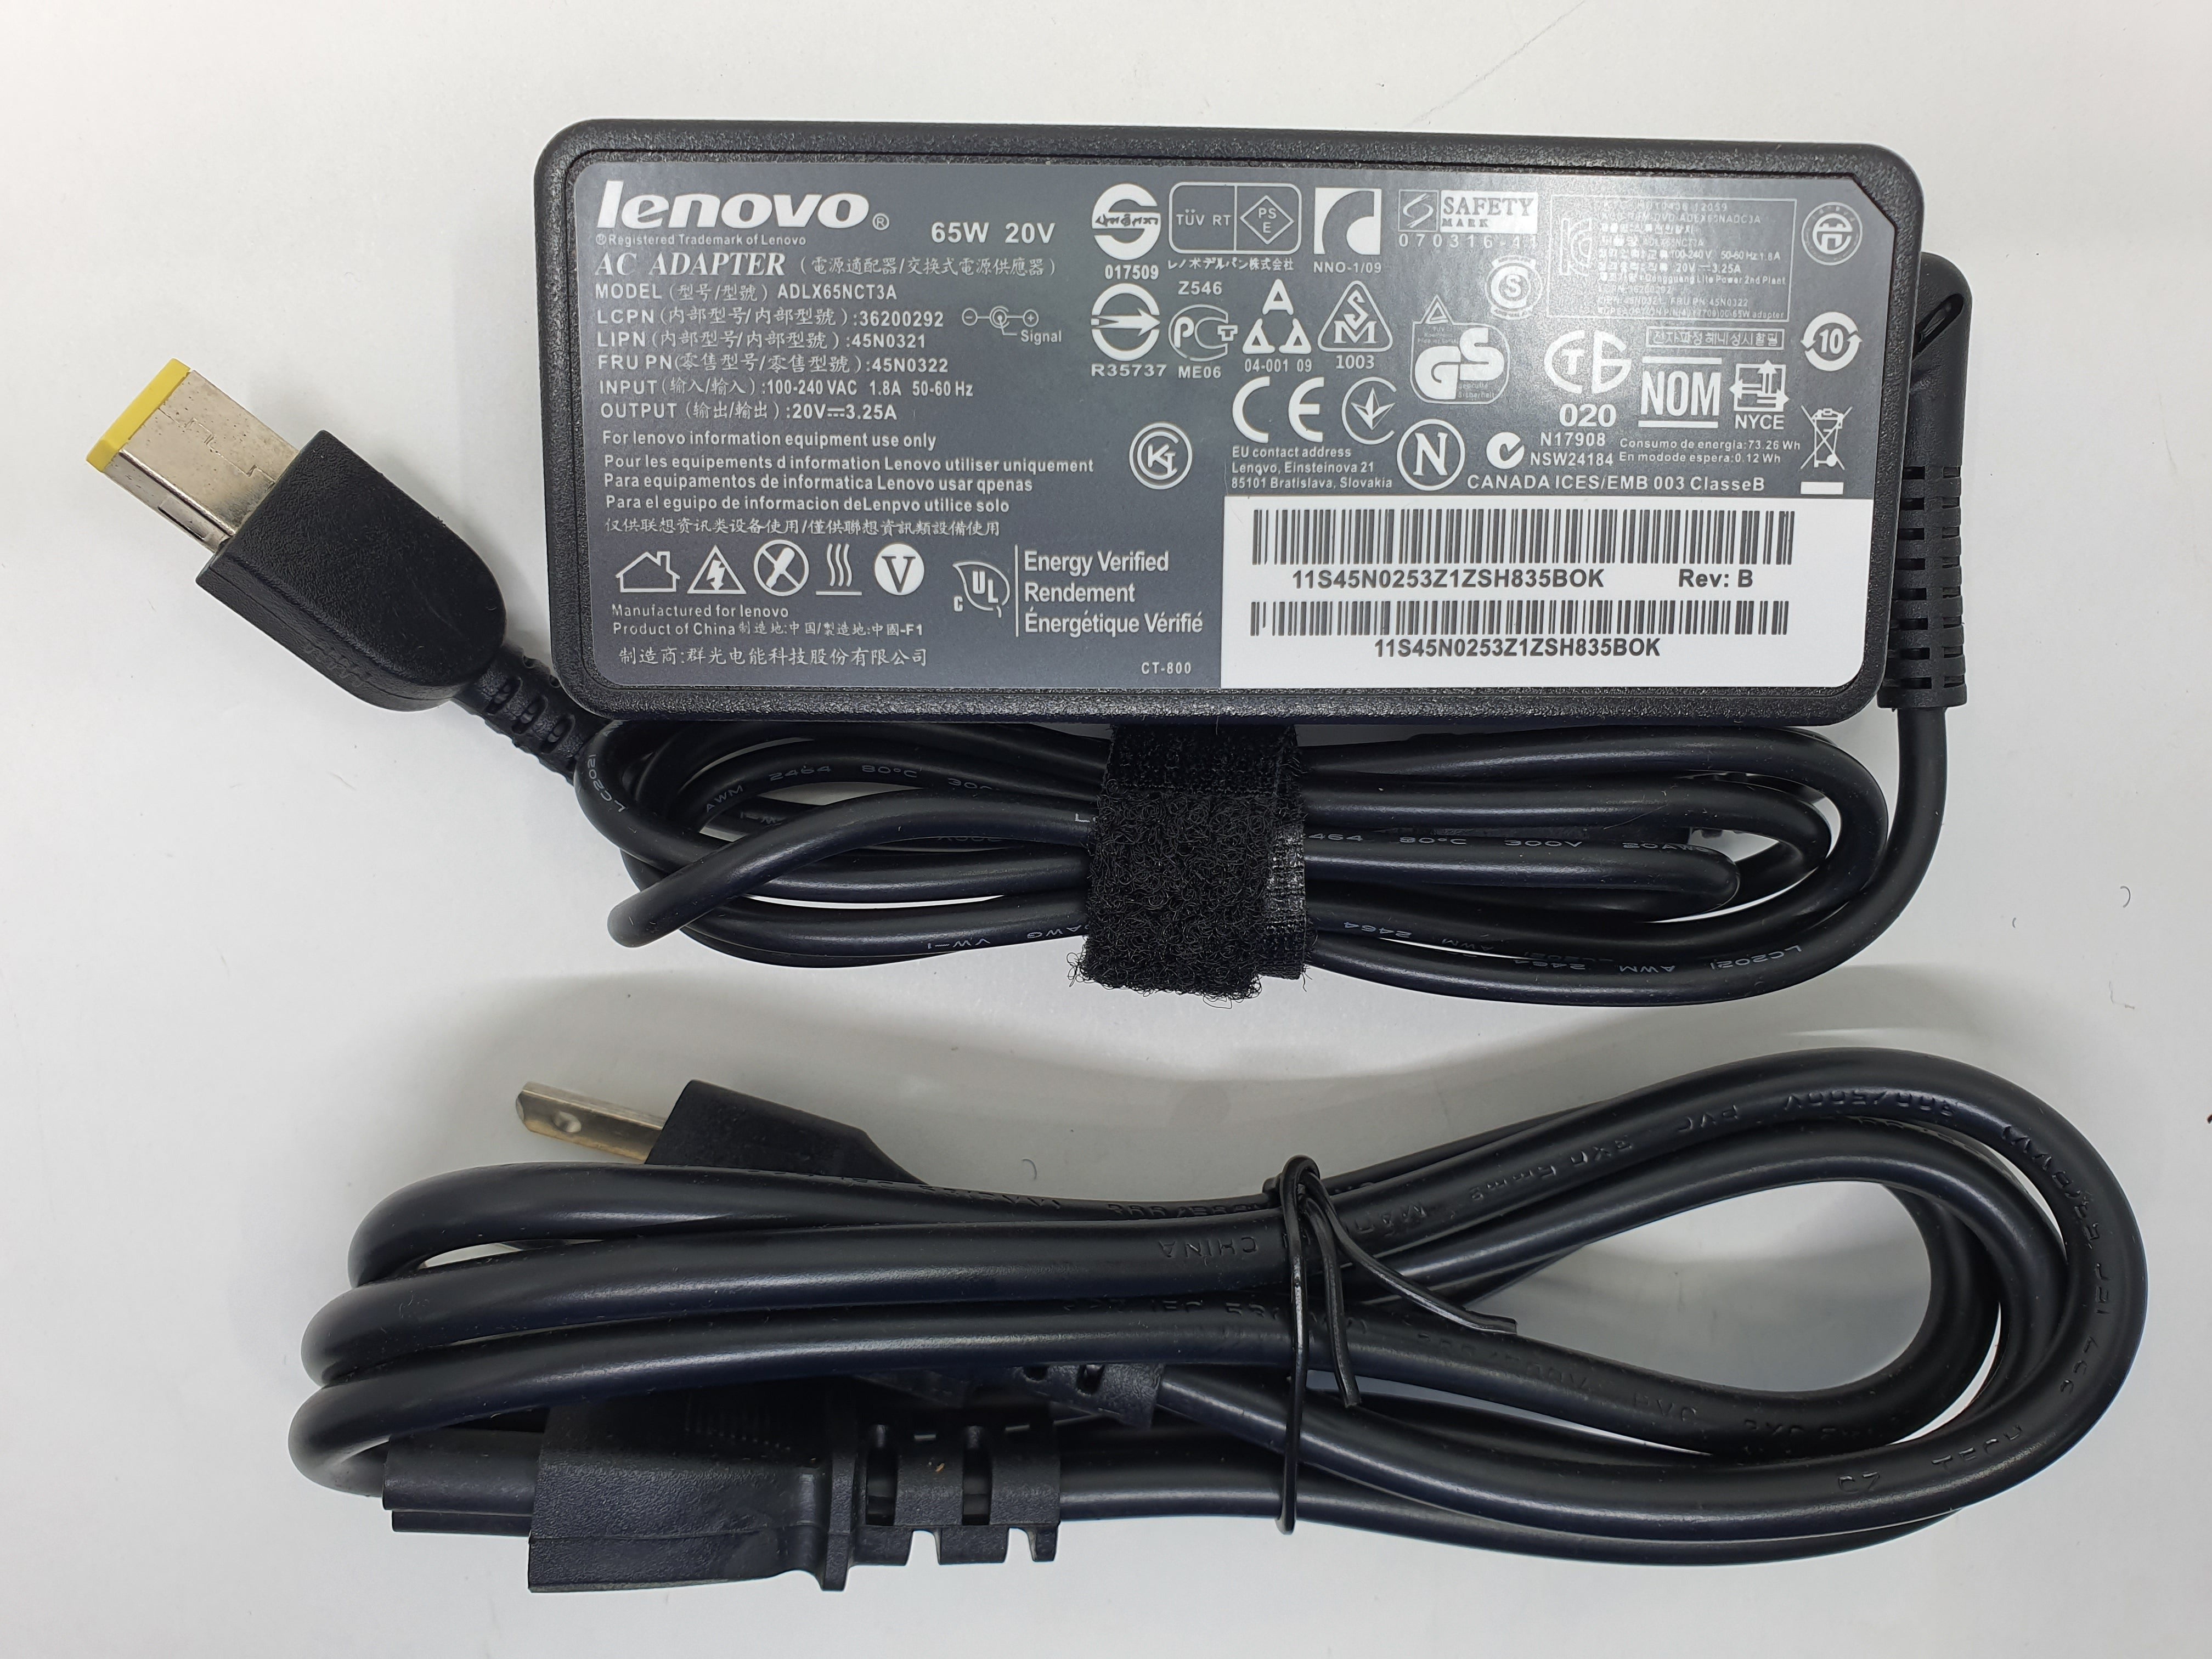 Lenovo Adapter 65W USB Port A1